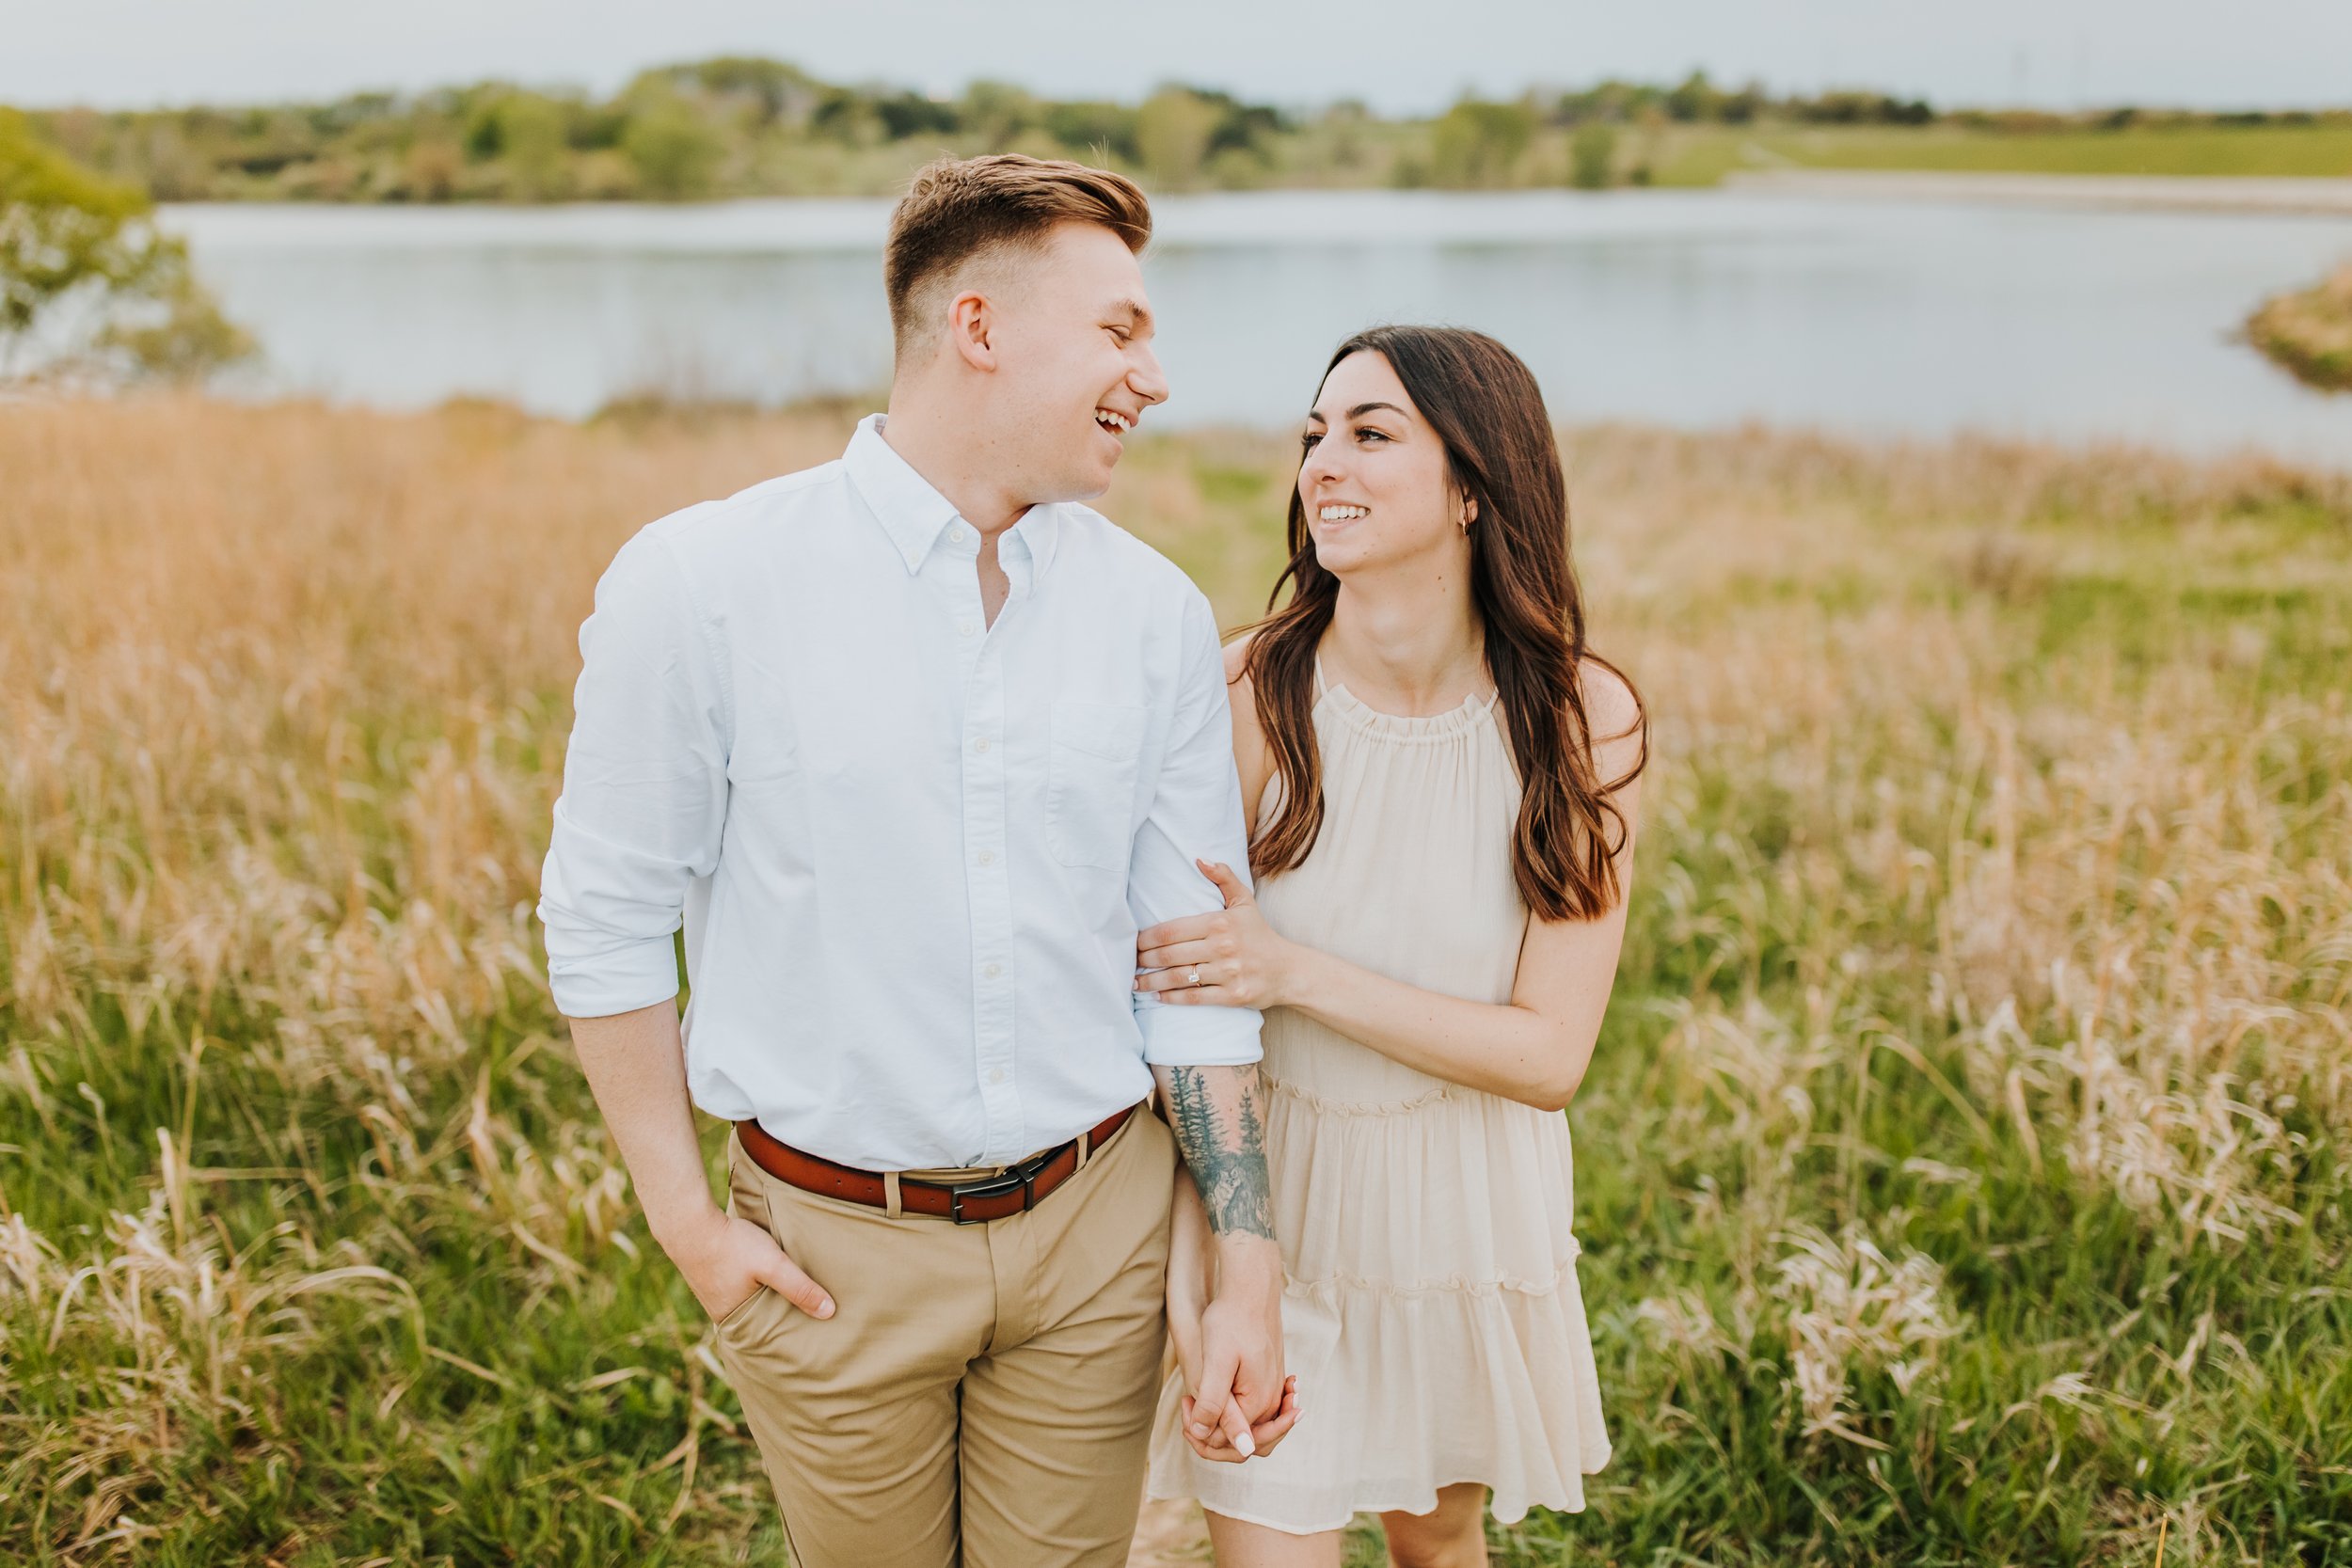 Allison & Liam - Engaged - Nathaniel Jensen Photography - Omaha Nebraska Wedding Photographer-124.jpg